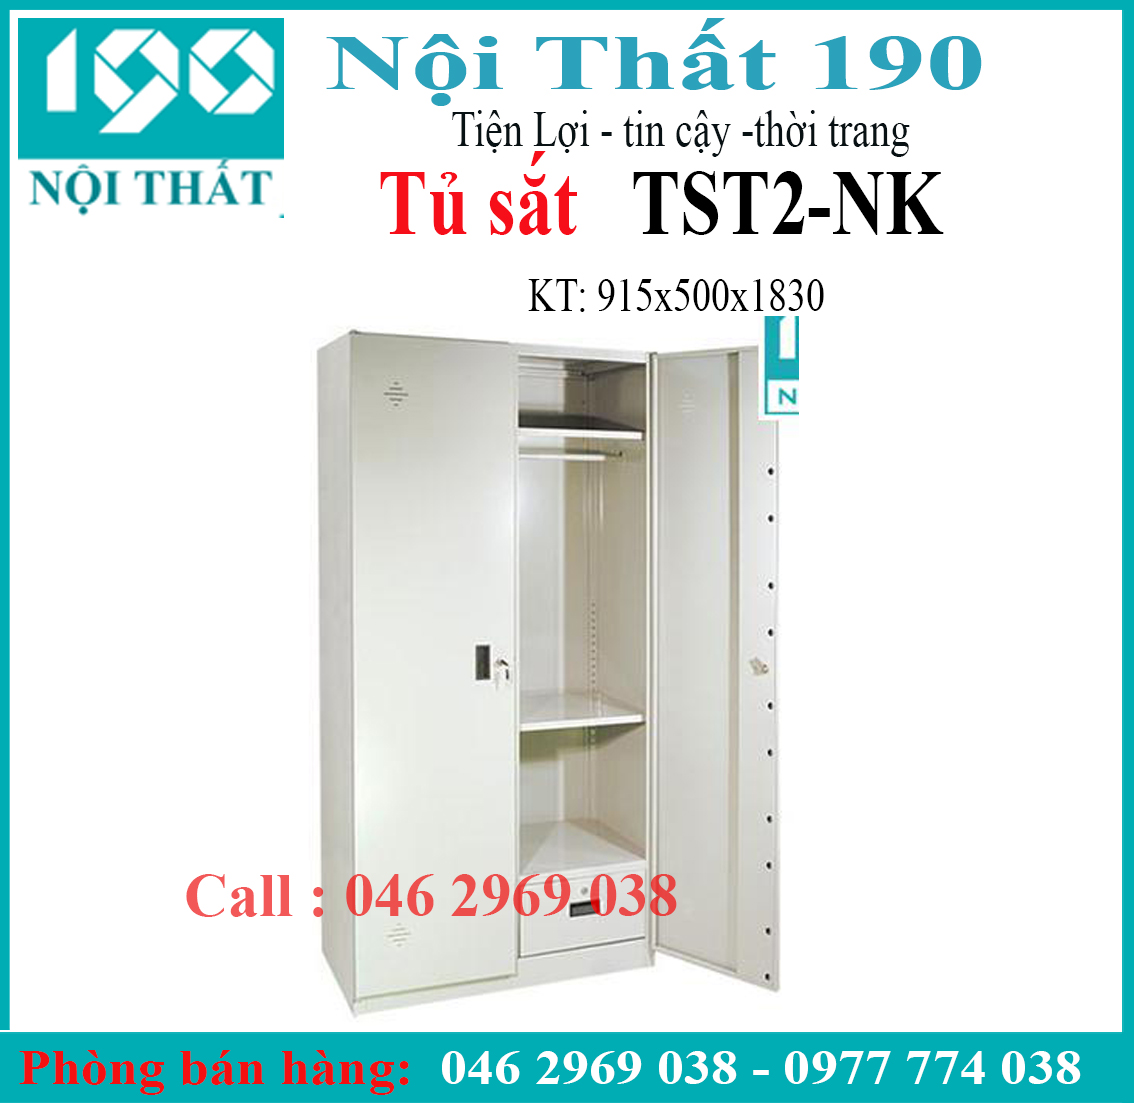 Tủ TST2-NK